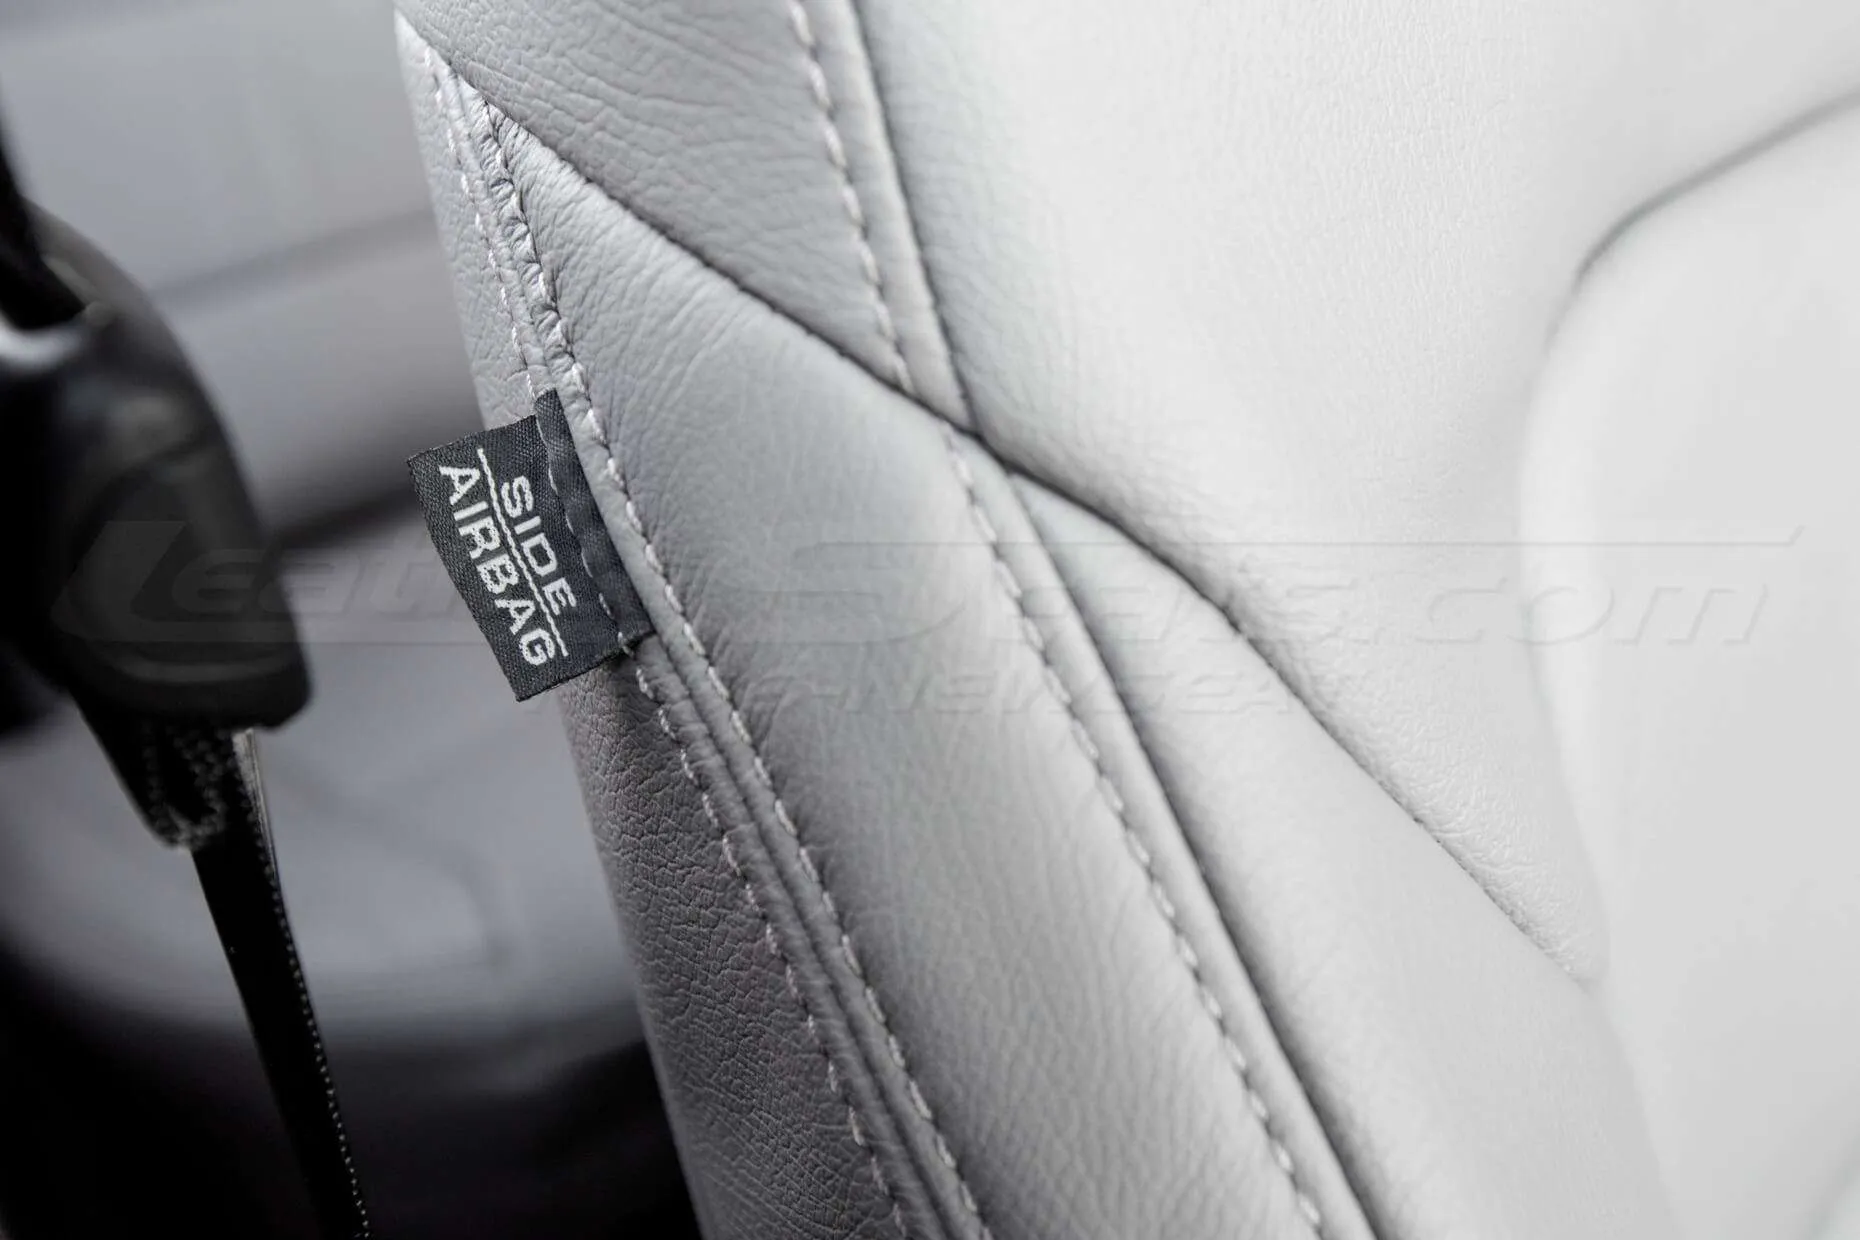 Honda Tucson Installed Leather Seats - Ash - Side airbag tag